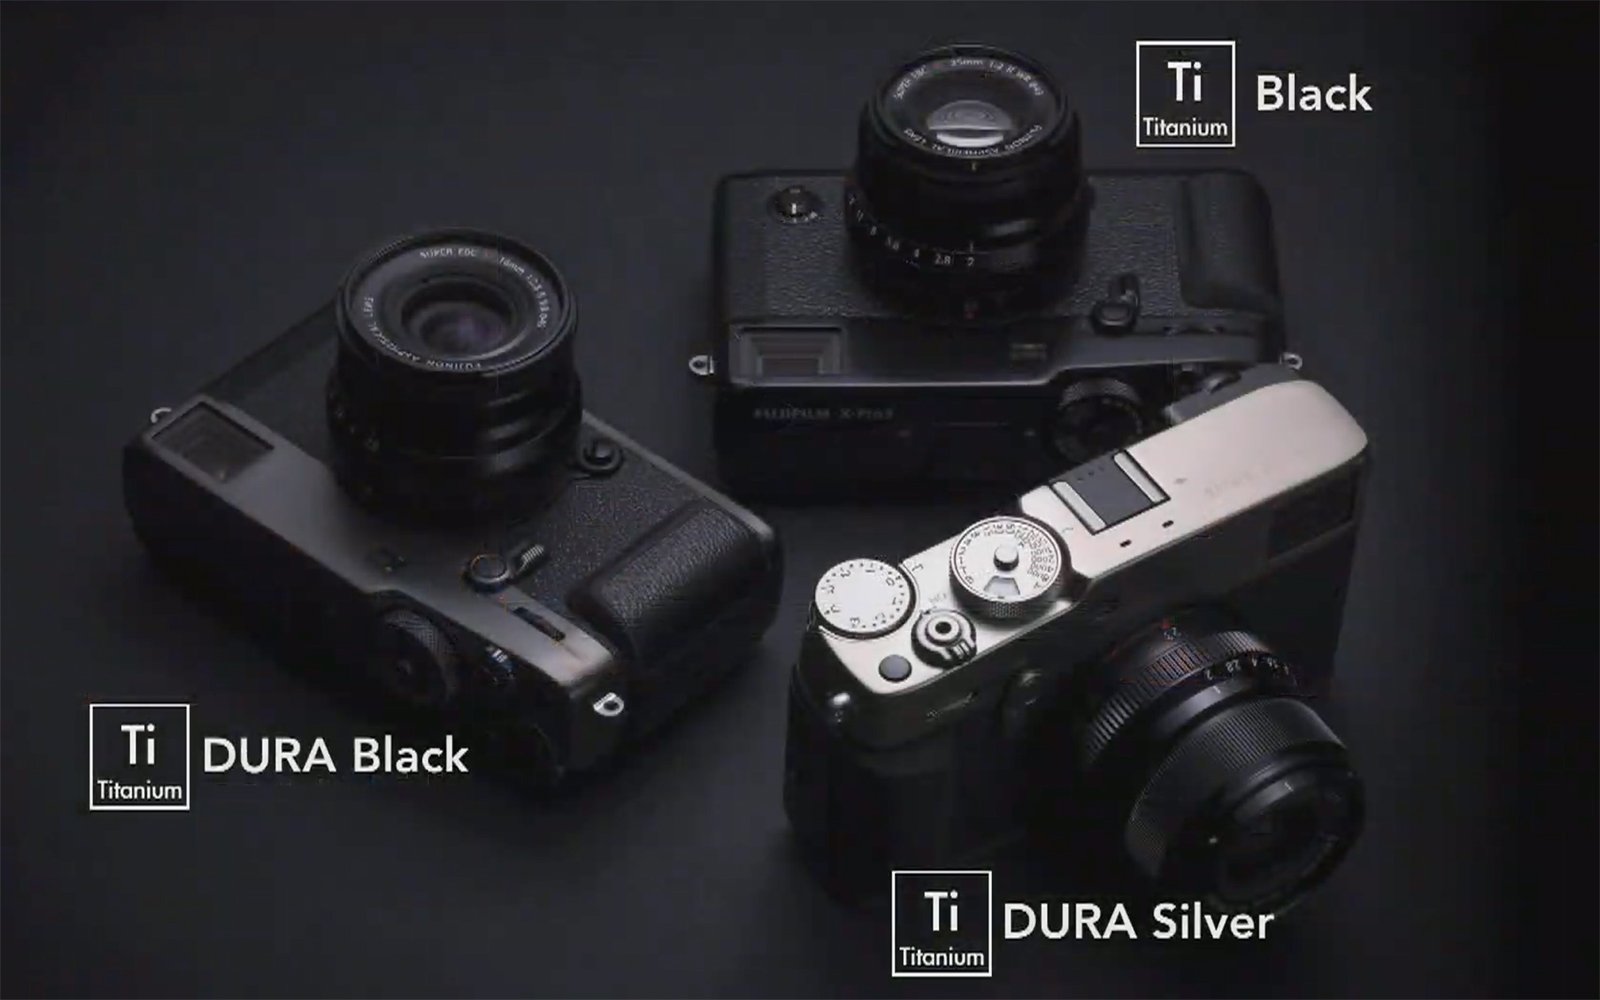 Fujifilm Reveals X-Pro3 with Titanium Body, Hidden LCD and New Film Simulation